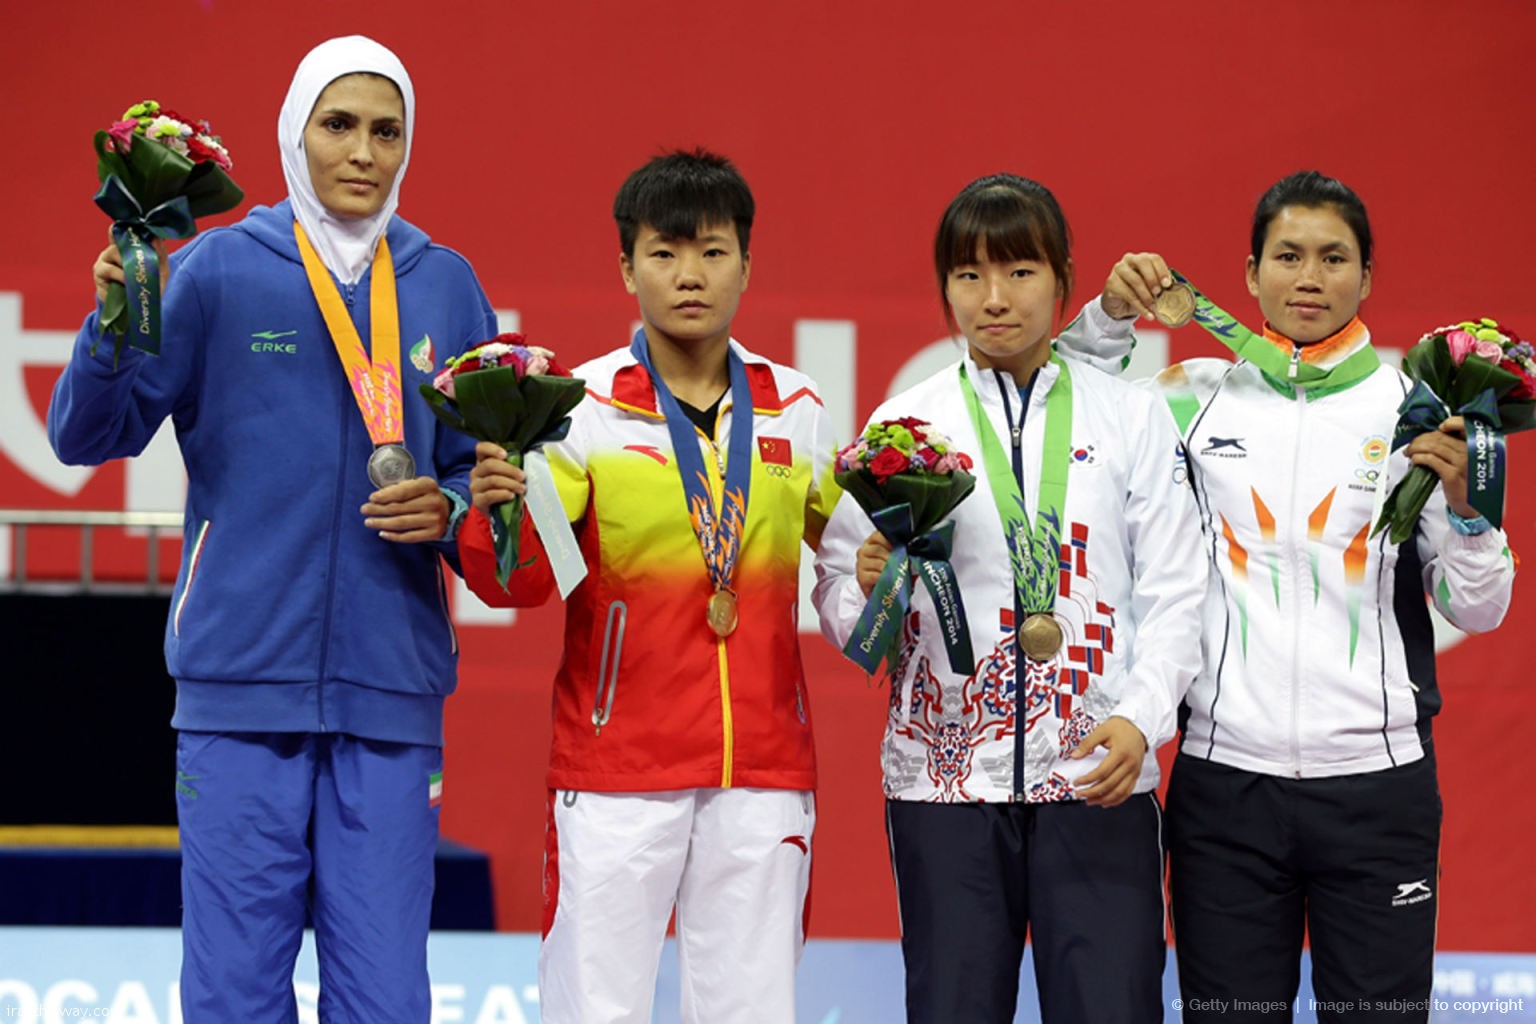 Iran’s girl wins gold medal in Asian Wushu championship